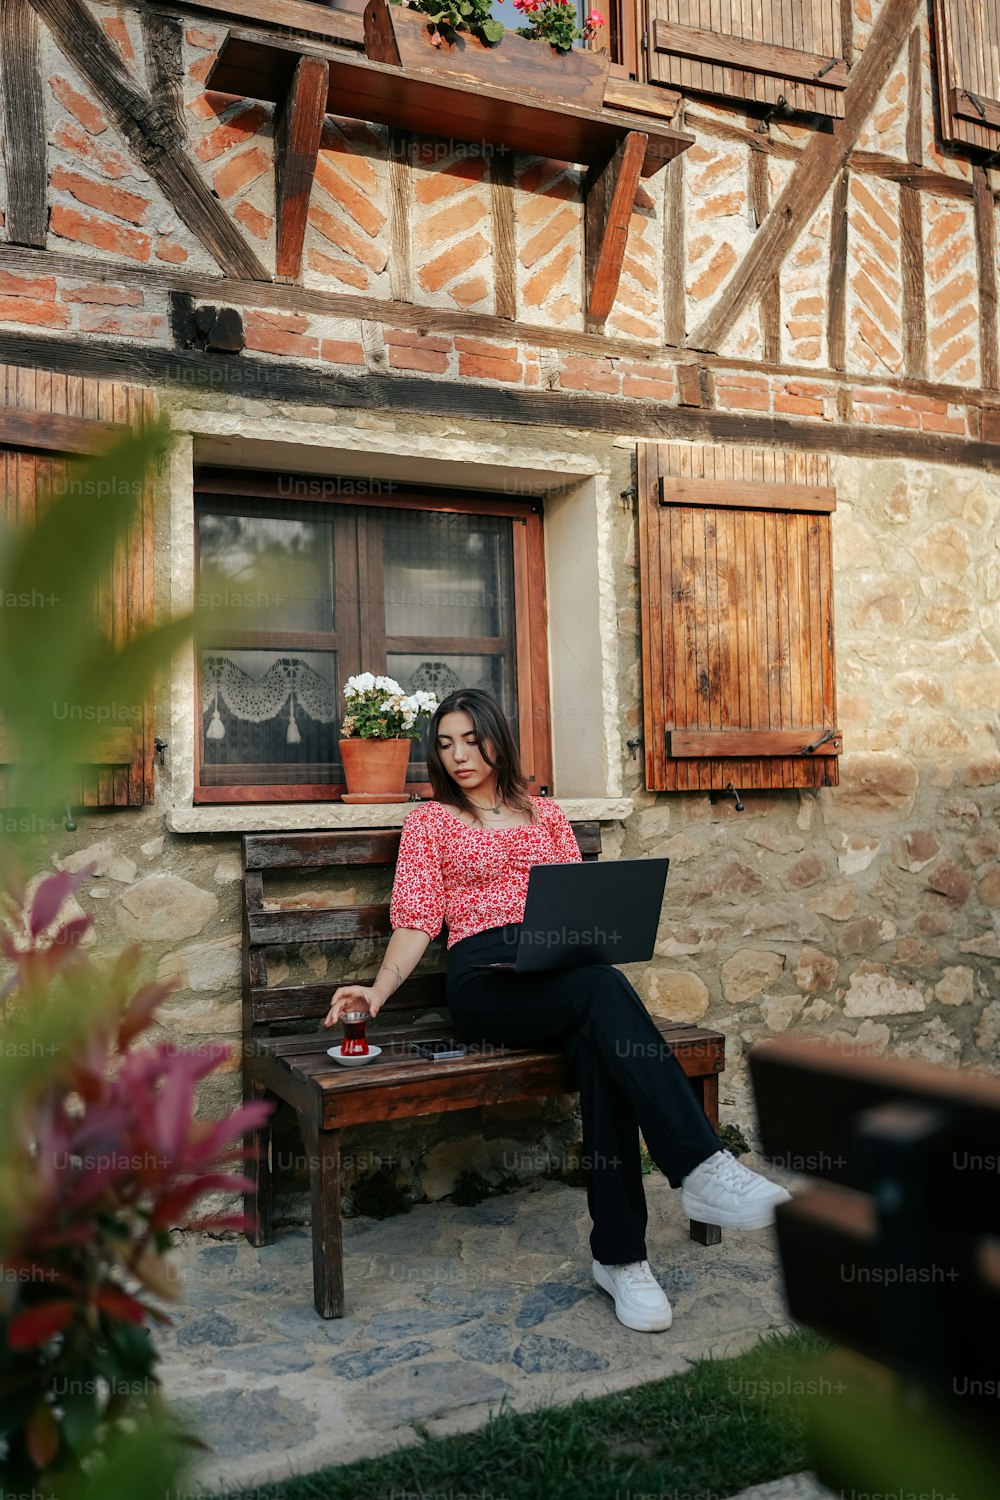 Una donna seduta su una panchina con un computer portatile